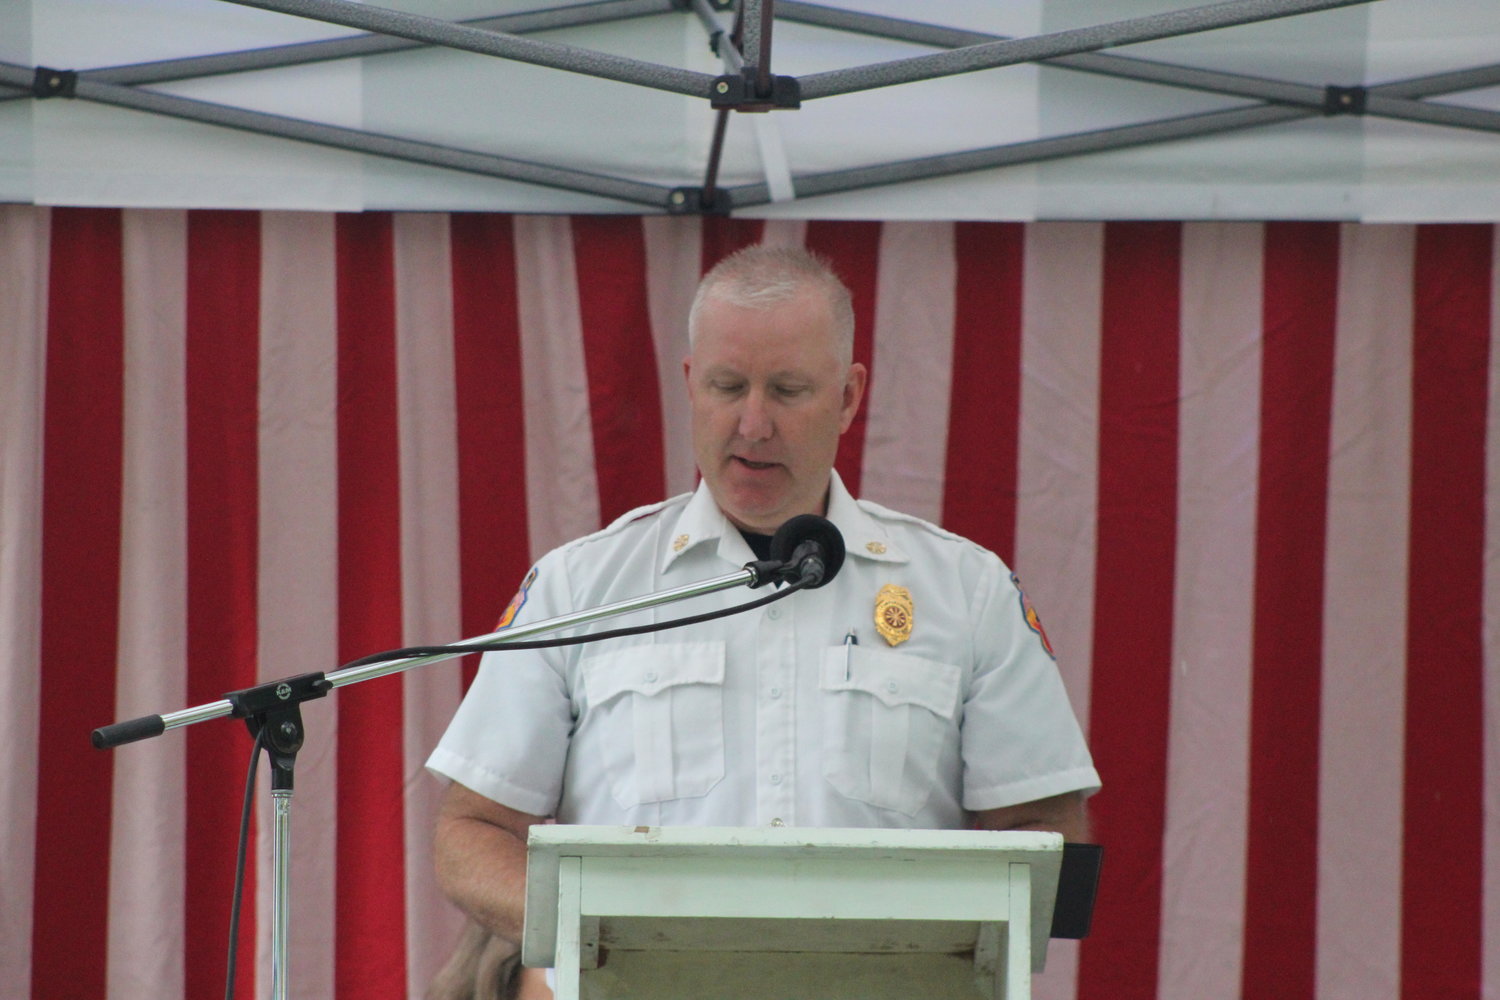 Crawfordsville Fire Chief Scott Busenbark was invited to speak as part of this year’s “Hometown Heroes Salute.”